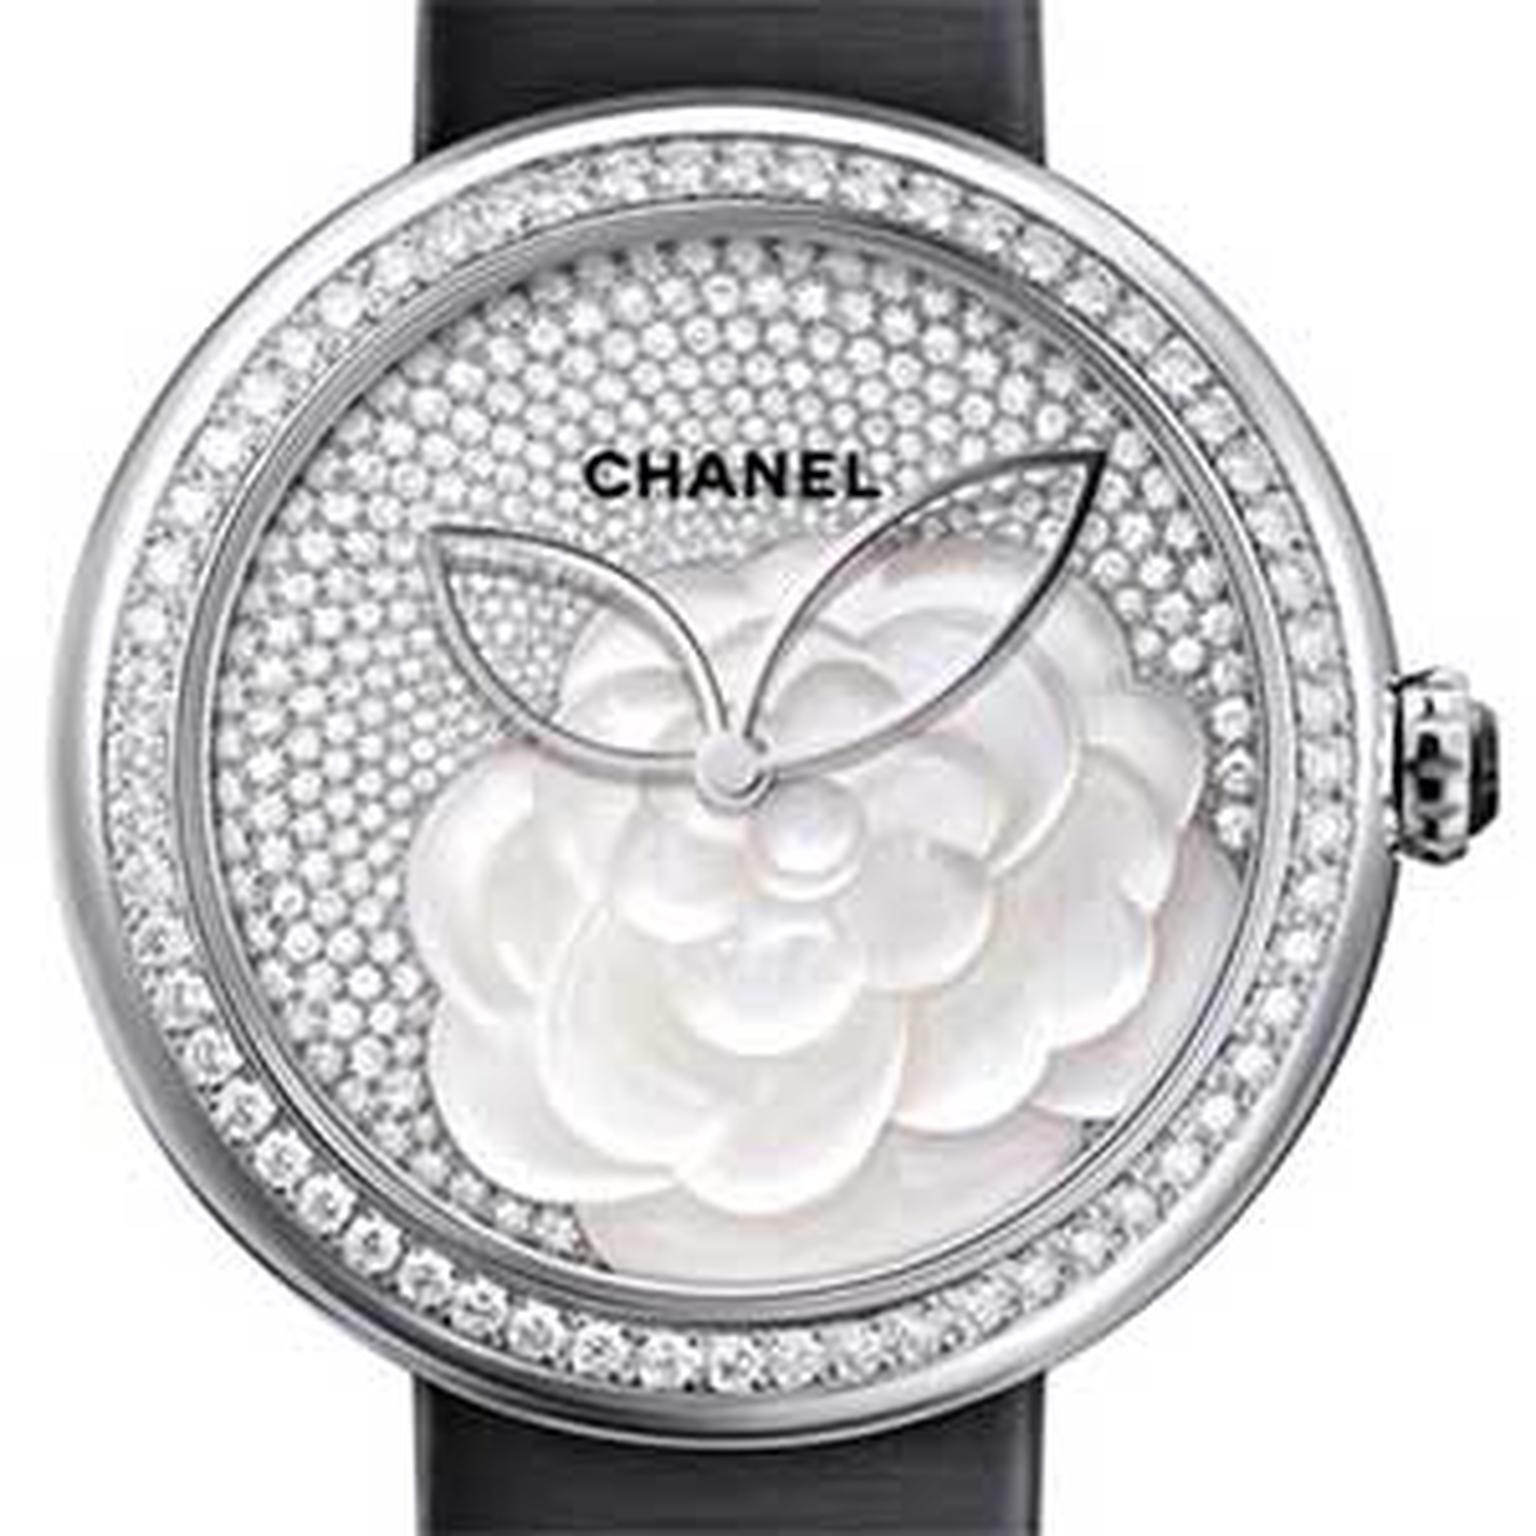 Chanel Camelia watch